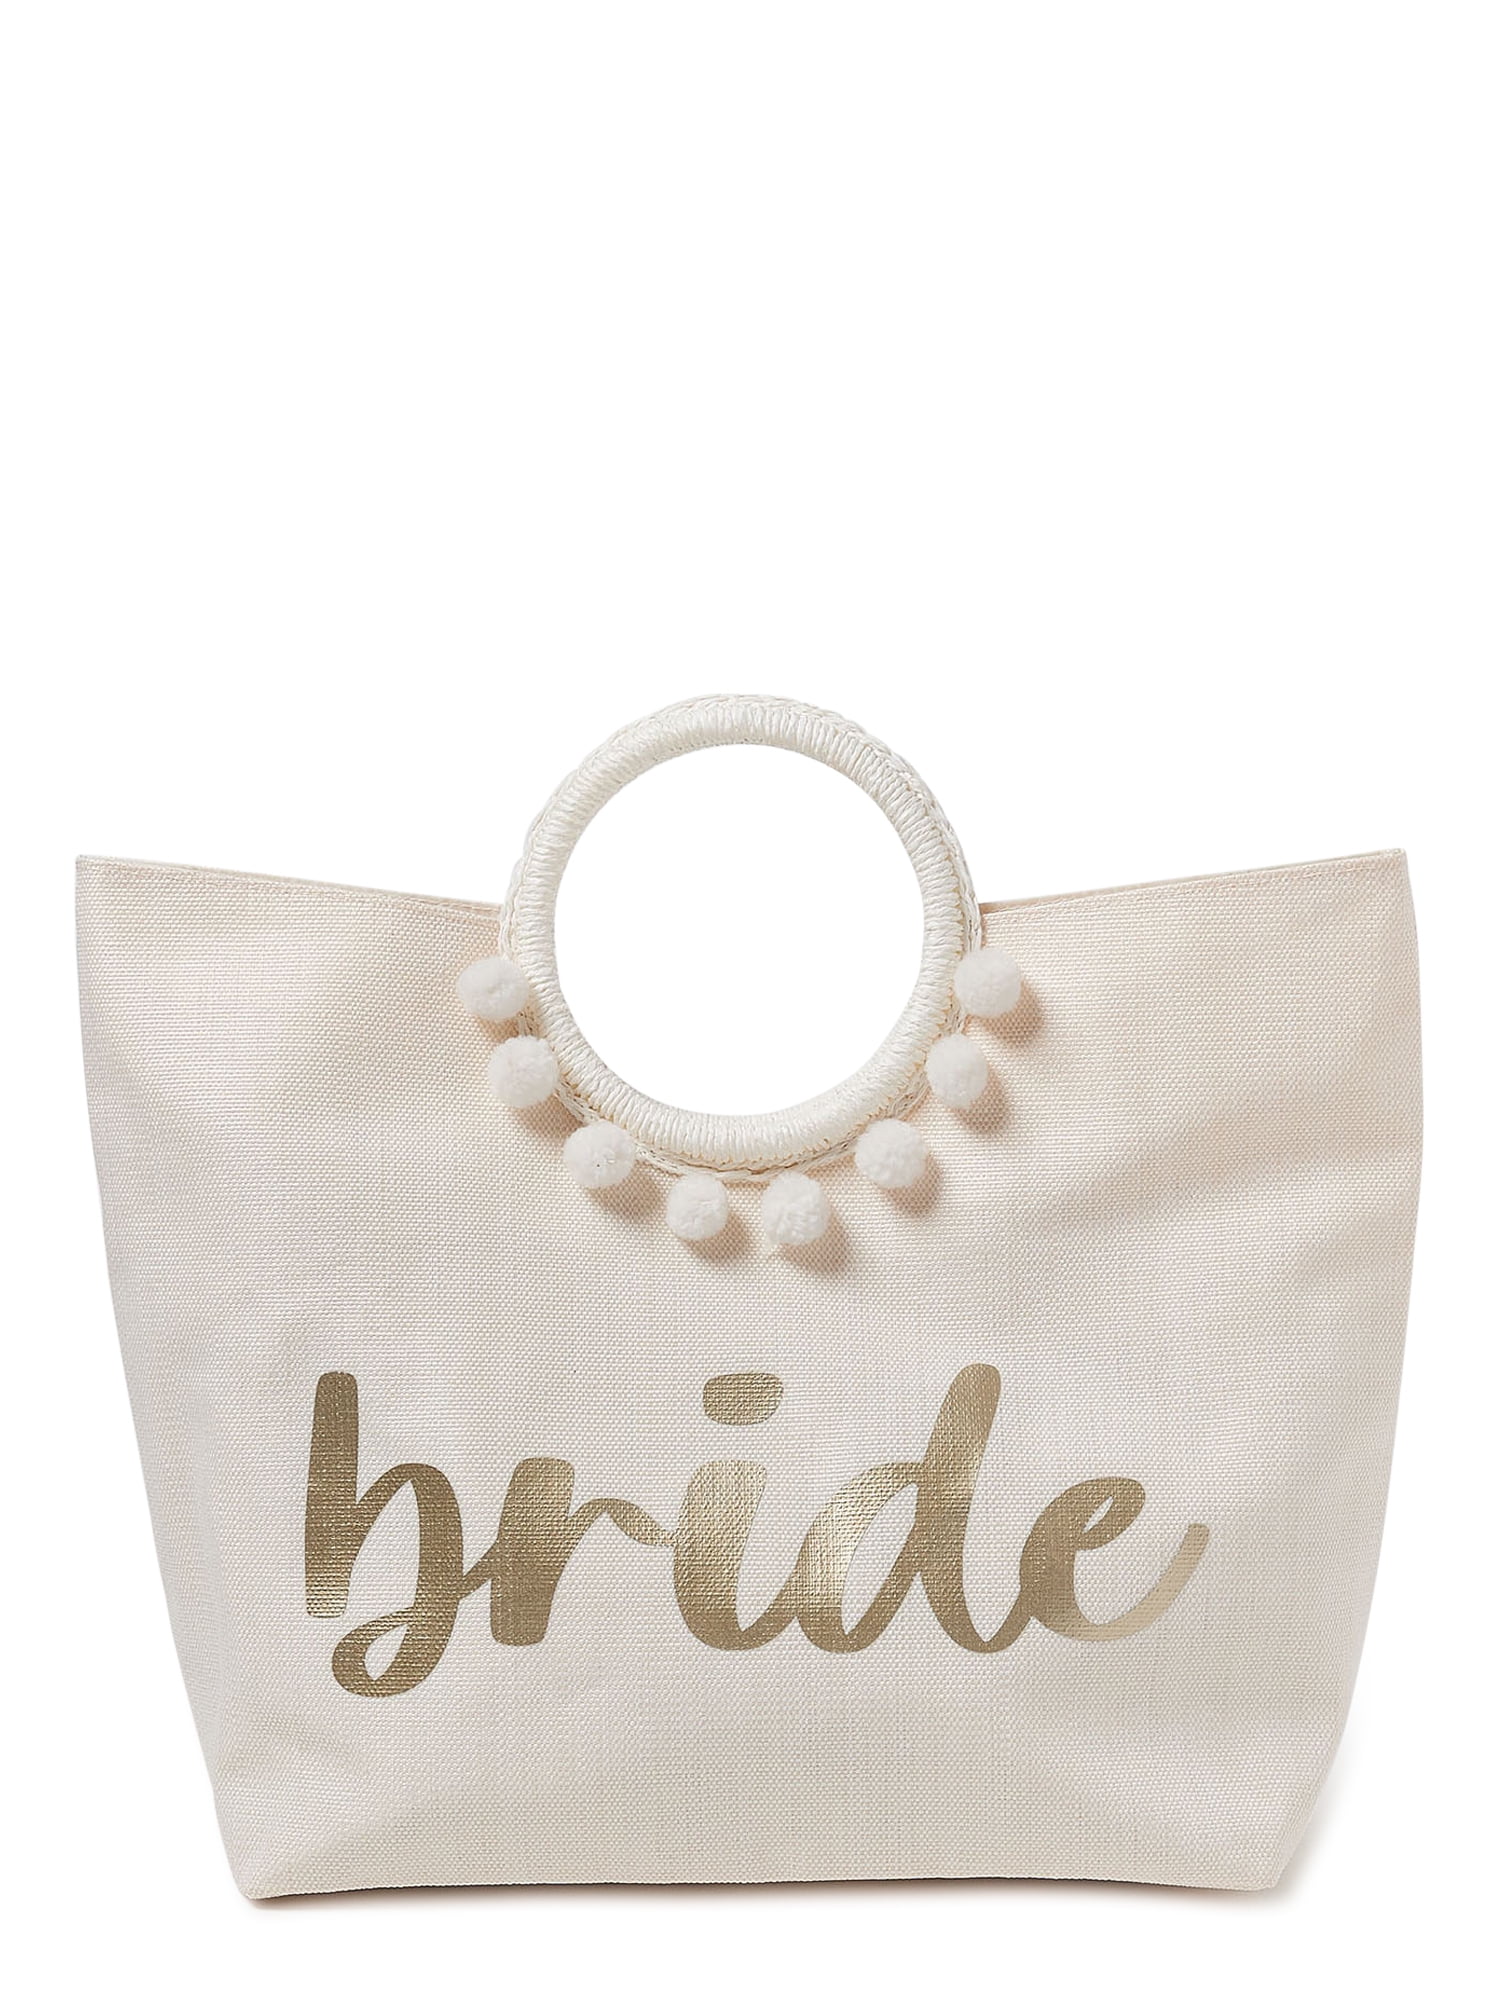 Gift For Bride Bridesmaids Gifts Ideas Handwoven Round Beach Style Bag Round Crossbody Bag Beach Style Shoulder Bag Handmade Woven Bag